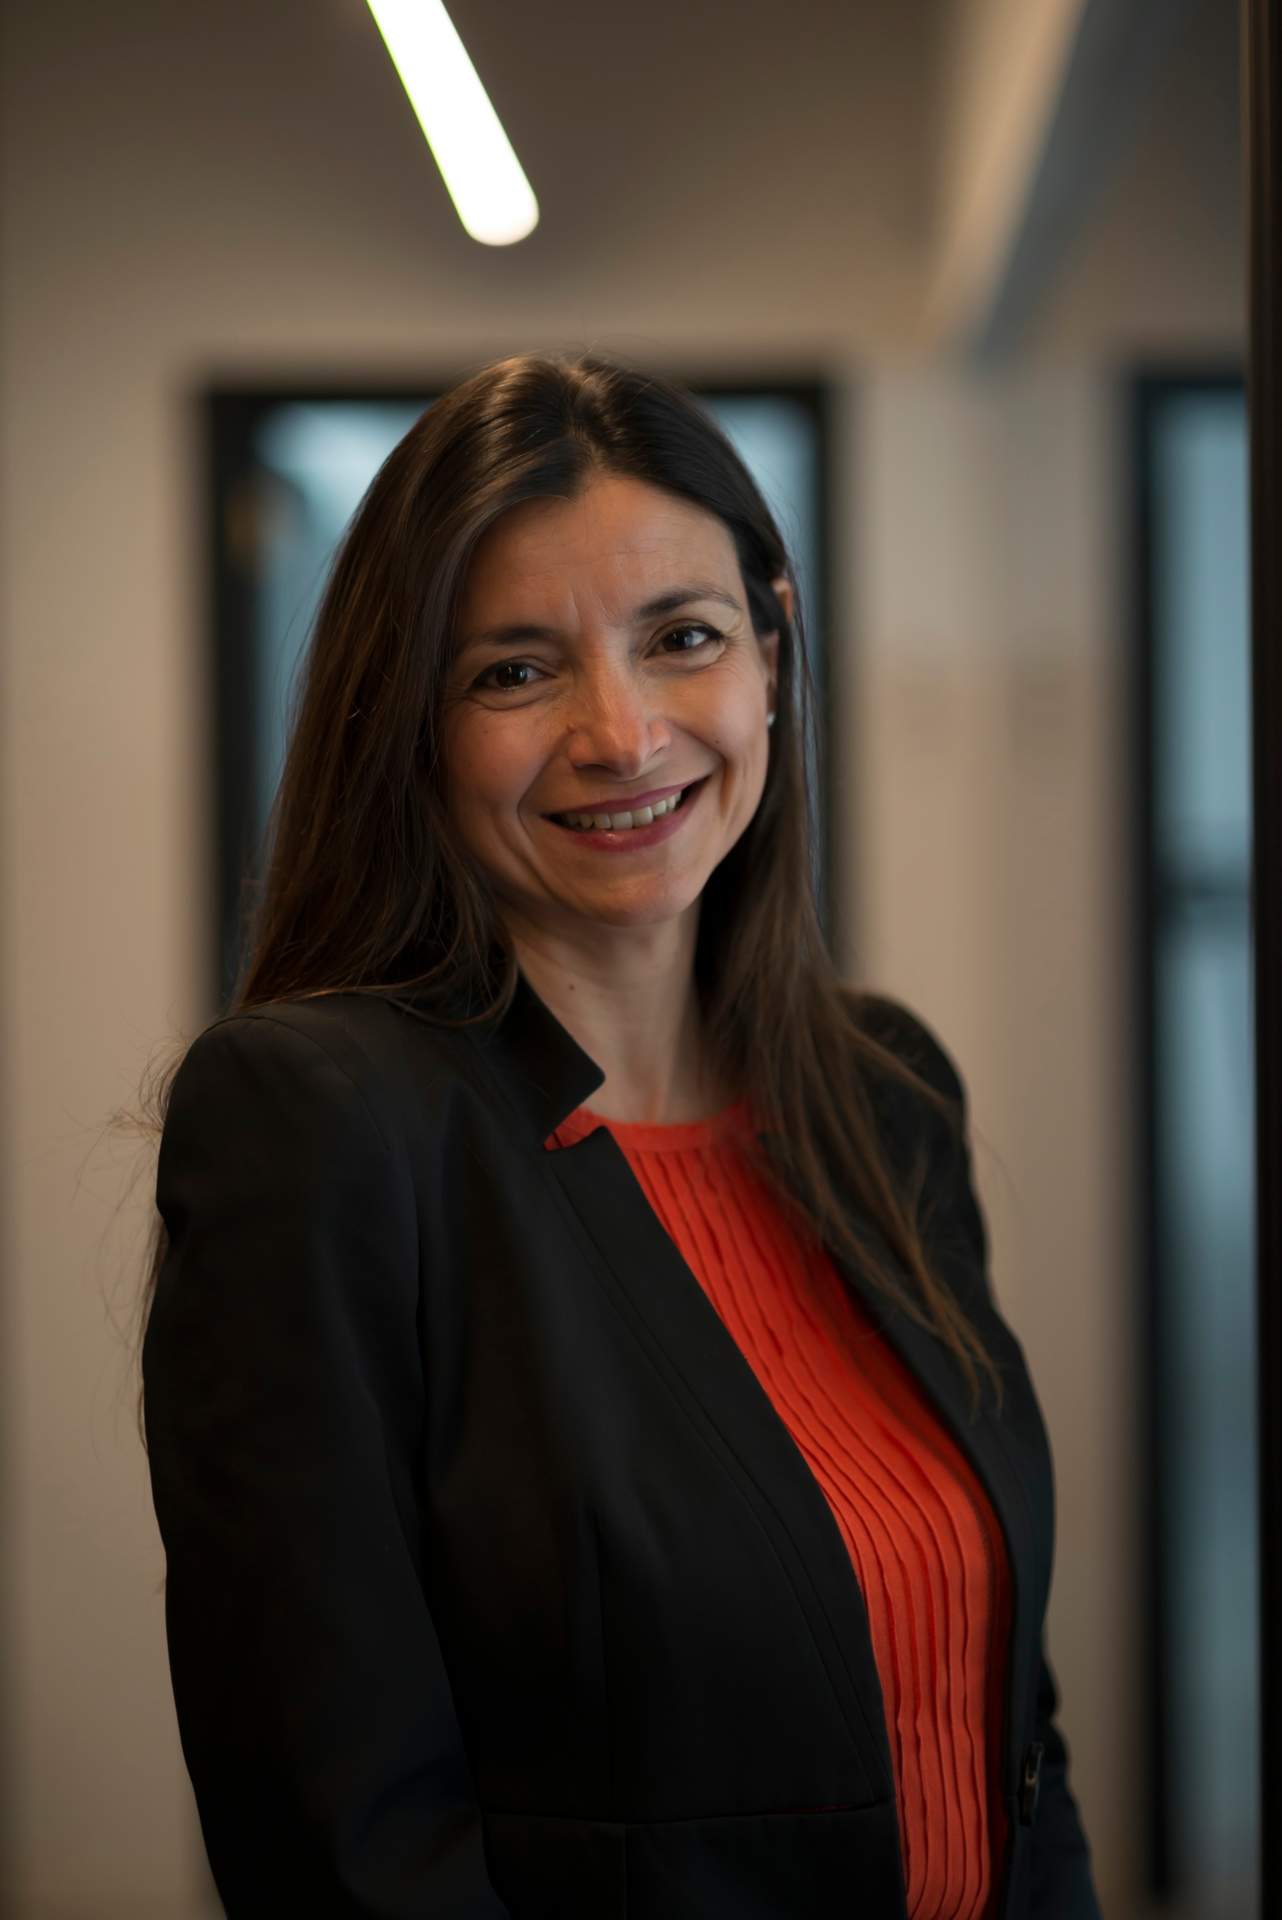 La española Cristina Alba Ochoa, nombrada directora financiera interina de Metro Bank